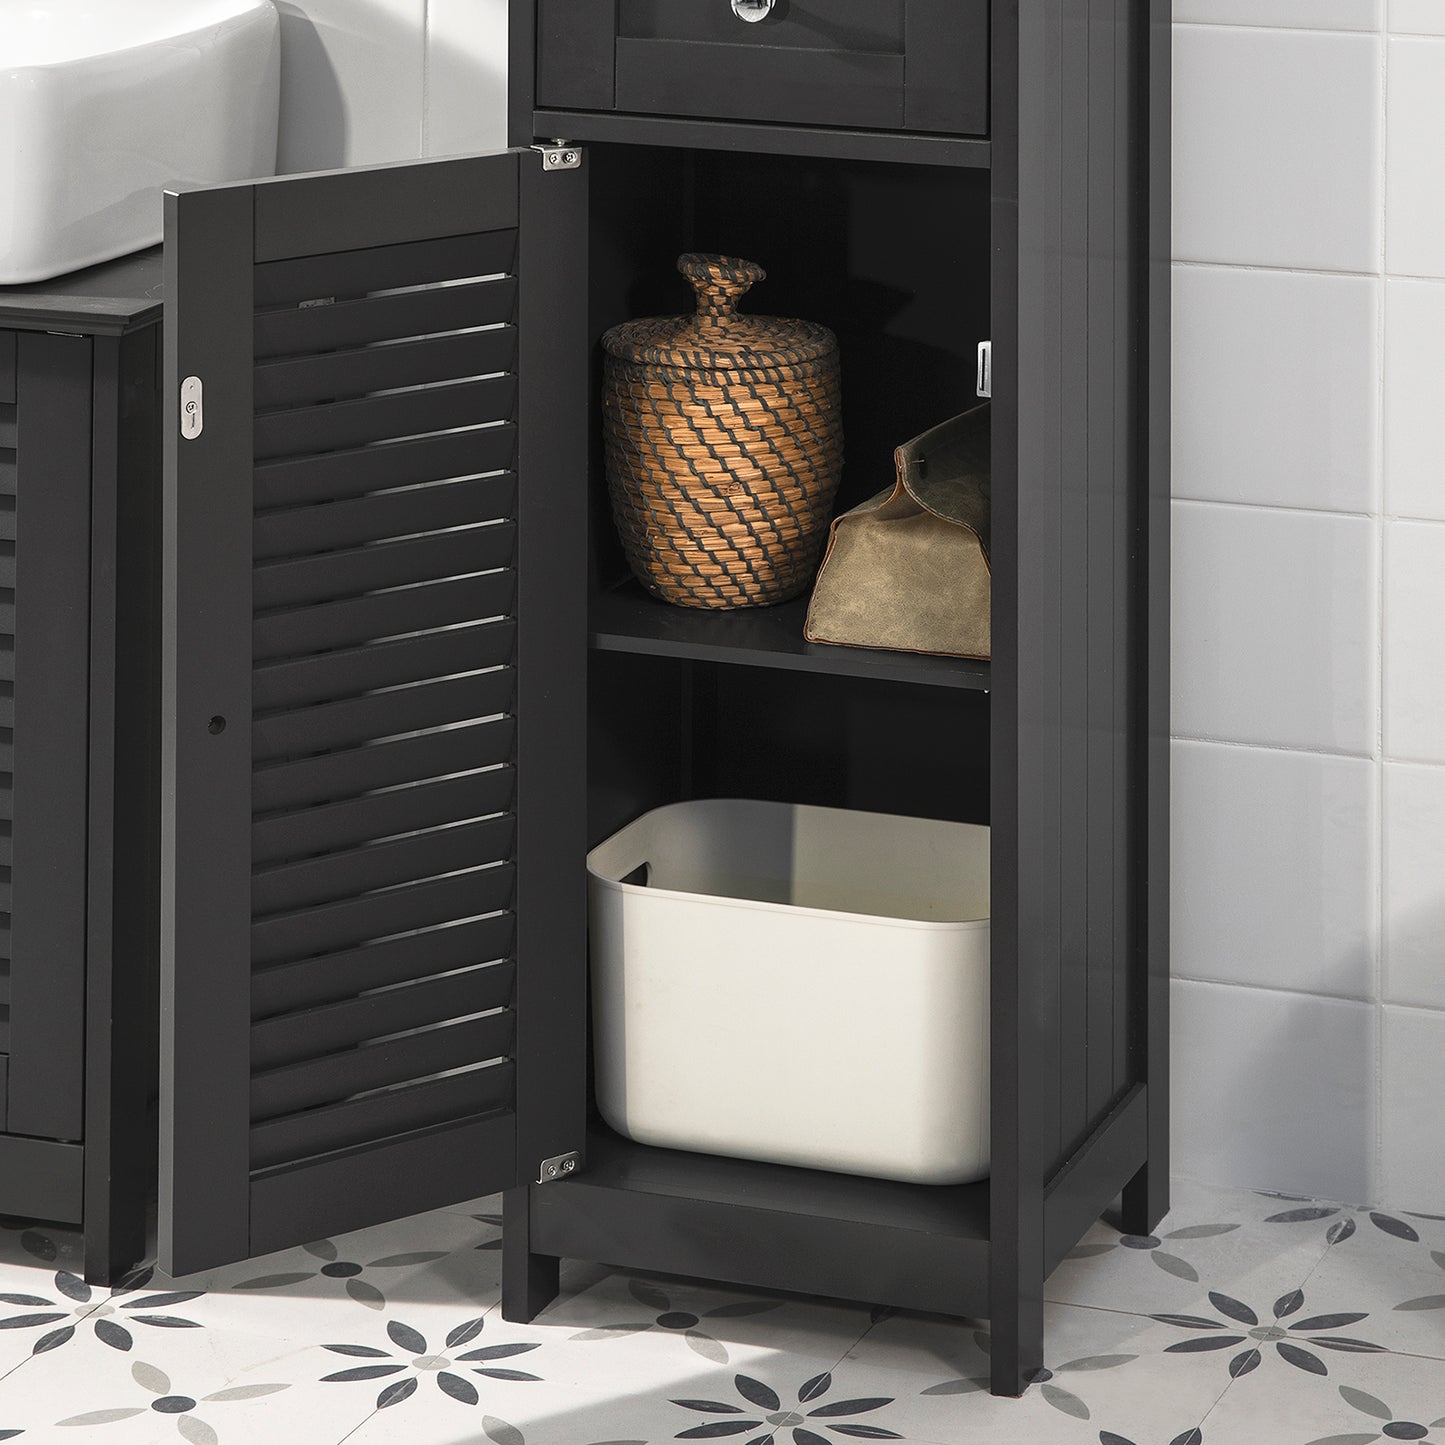 SoBuy FRG236-DG Tall Bathroom Cabinet with Shelf and Drawer, Tall Cupboard, Dark Grey Tall Cabinet